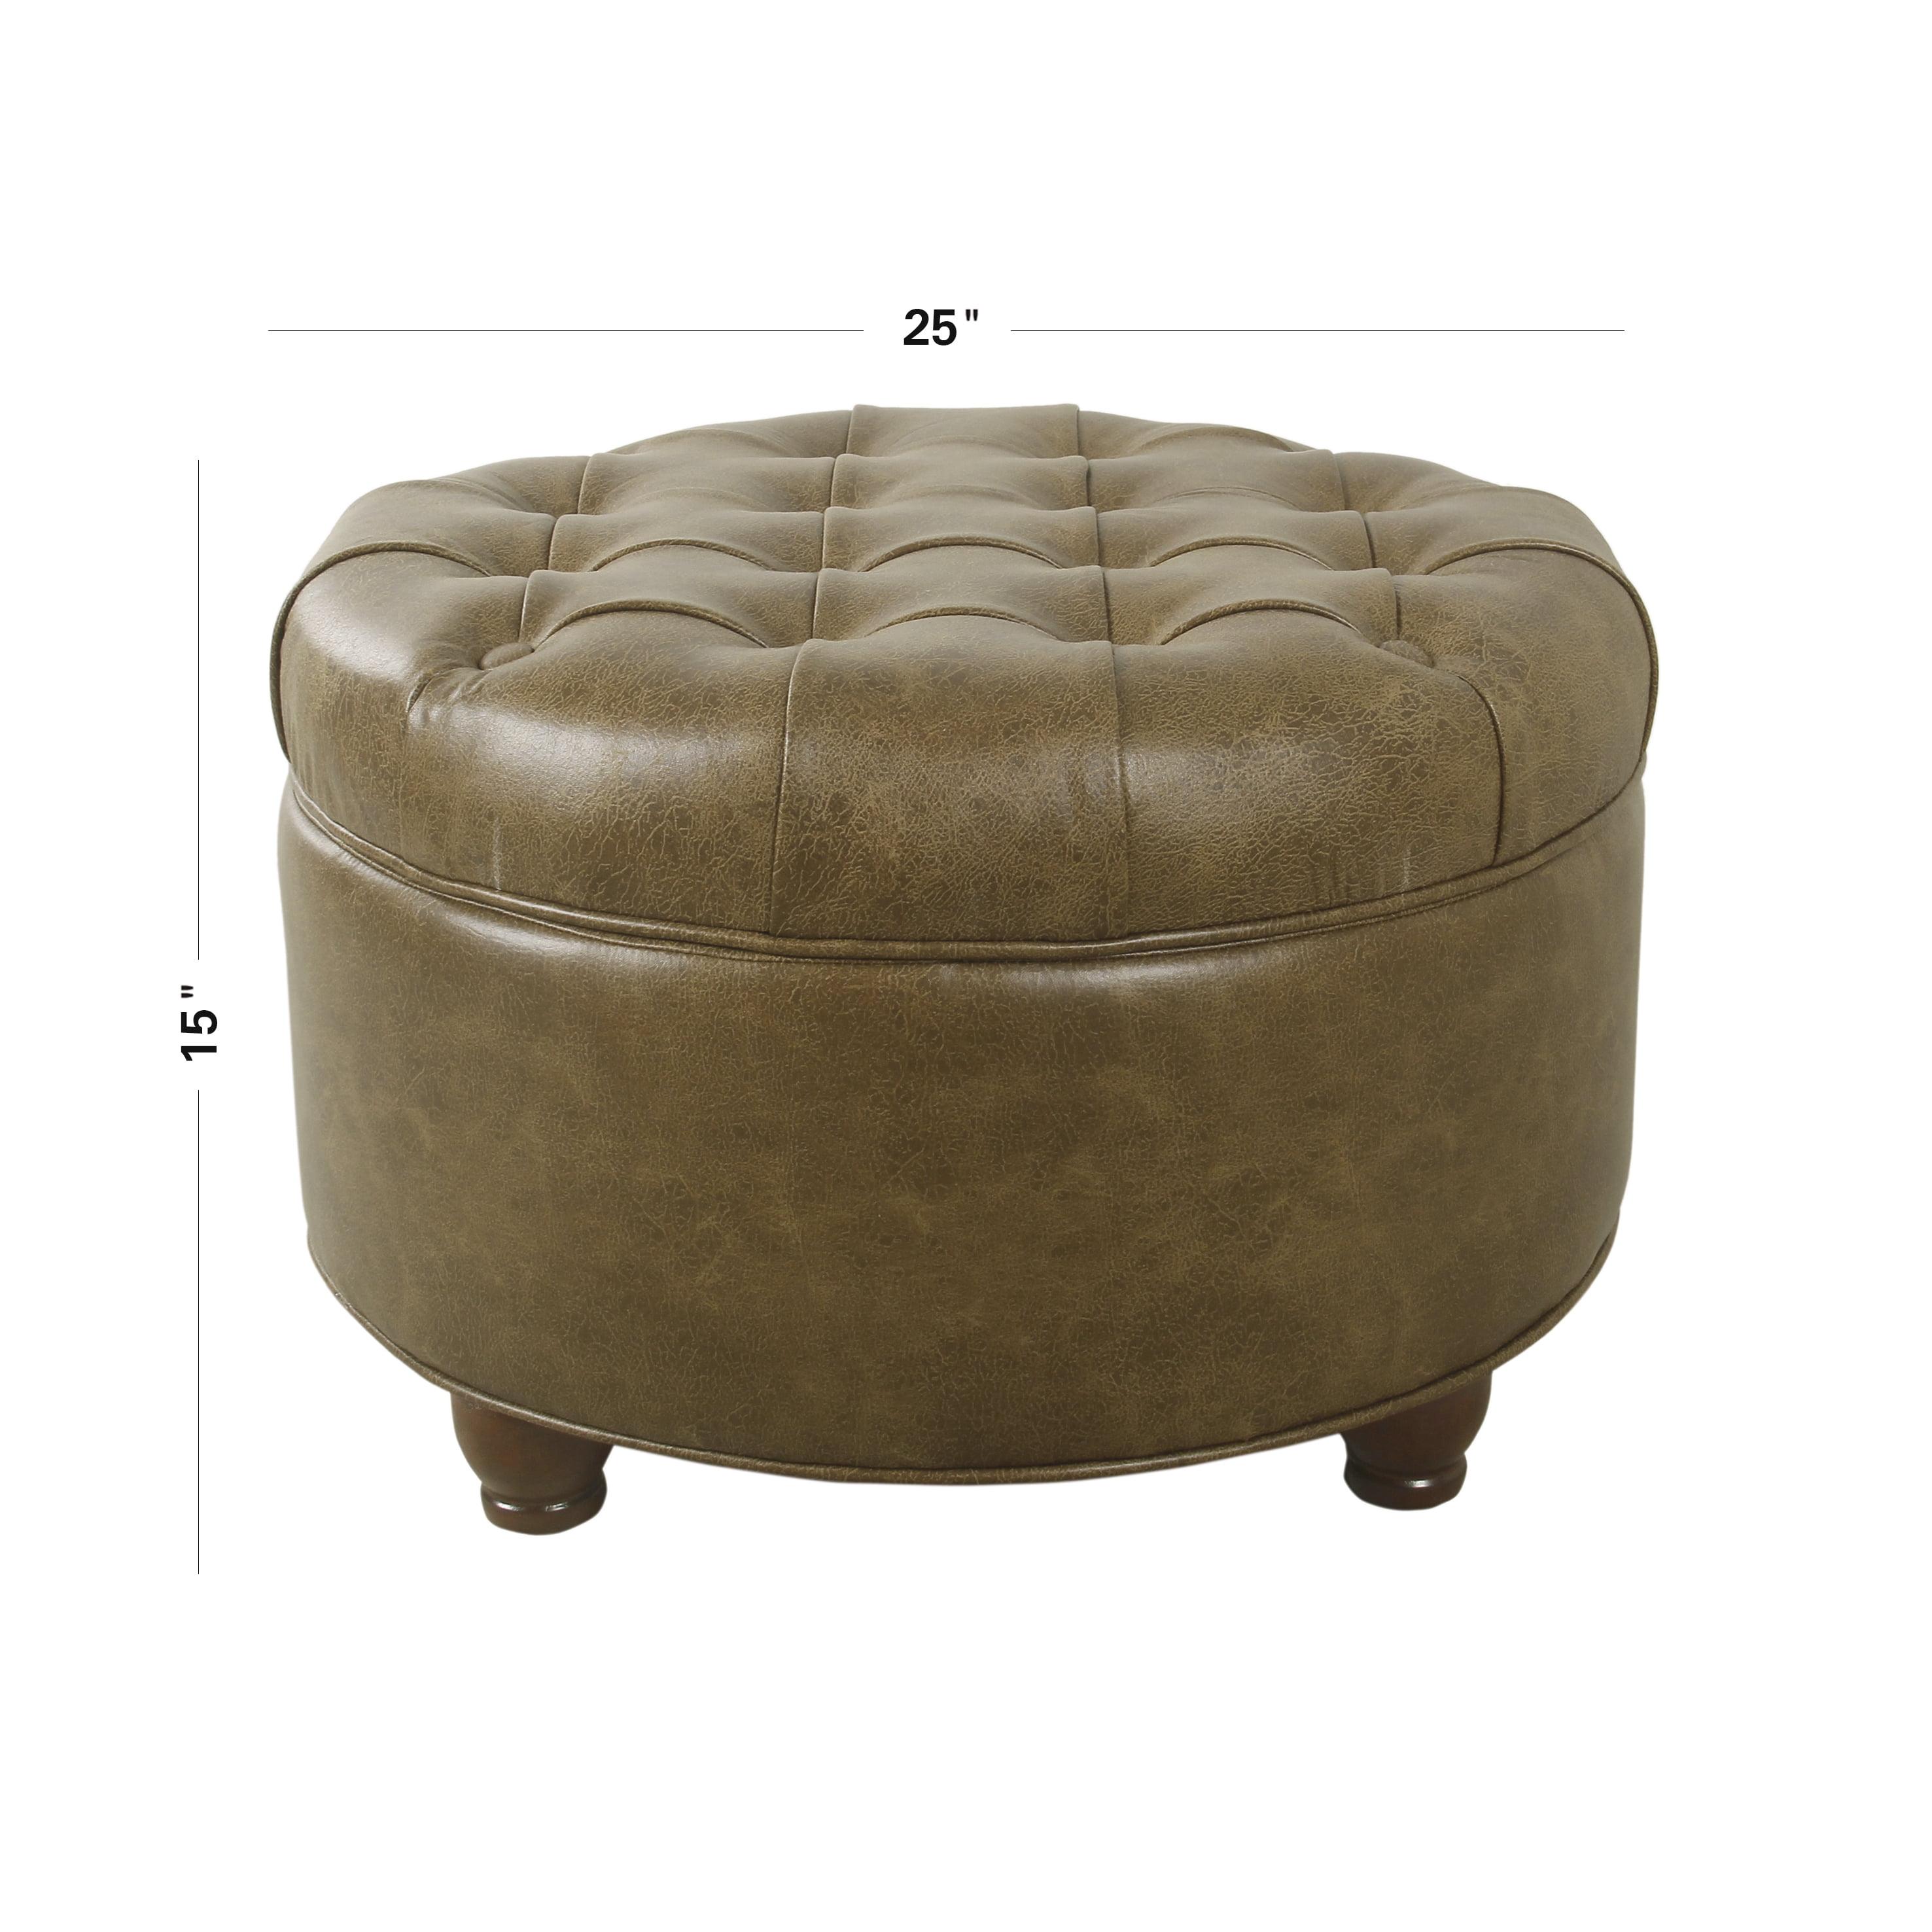 Elegant Faux Leather Tufted Round Ottoman with Storage